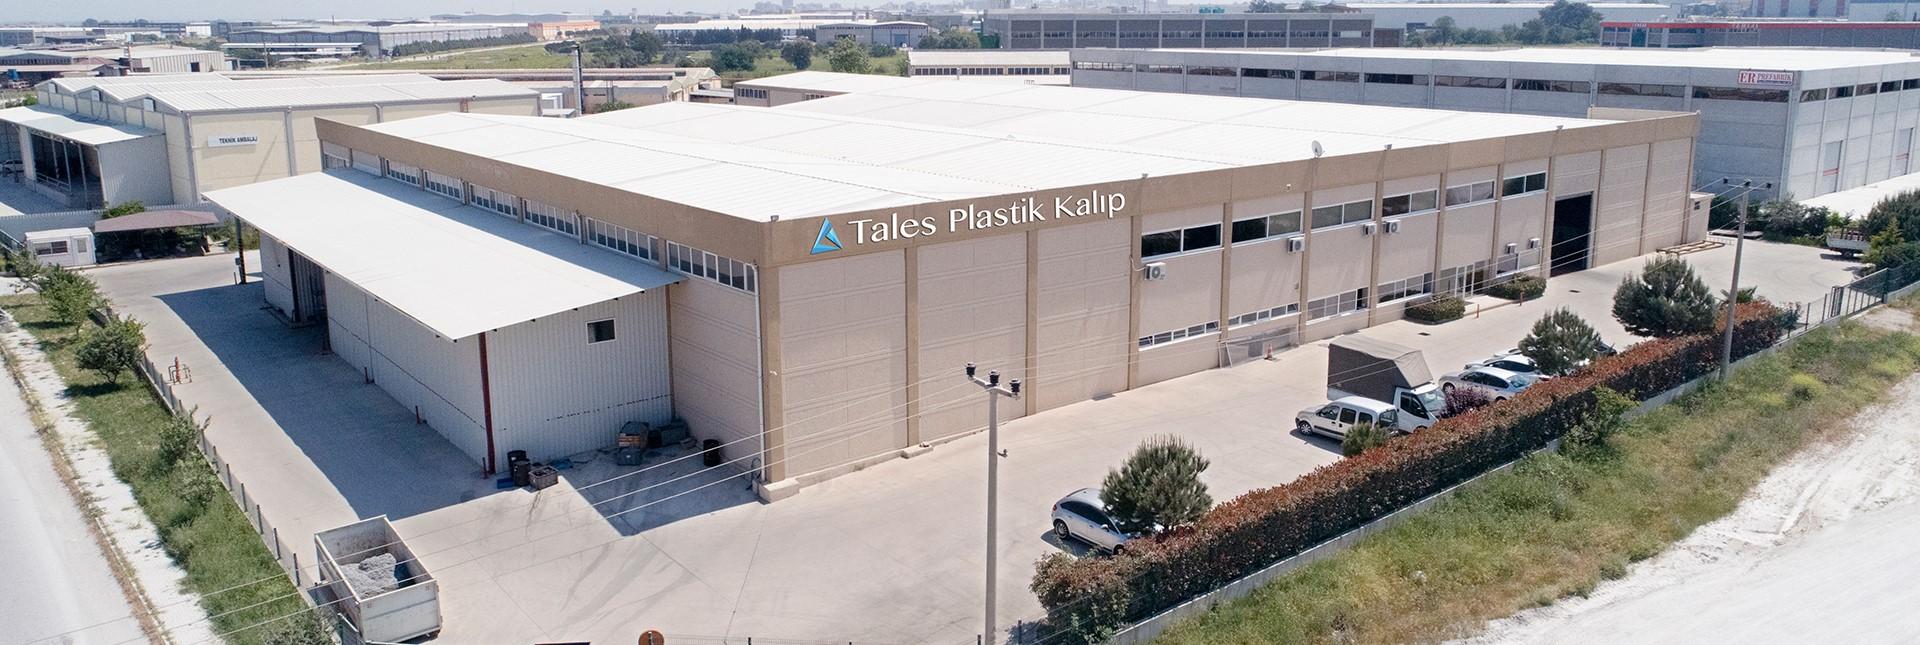 tales plastik factory